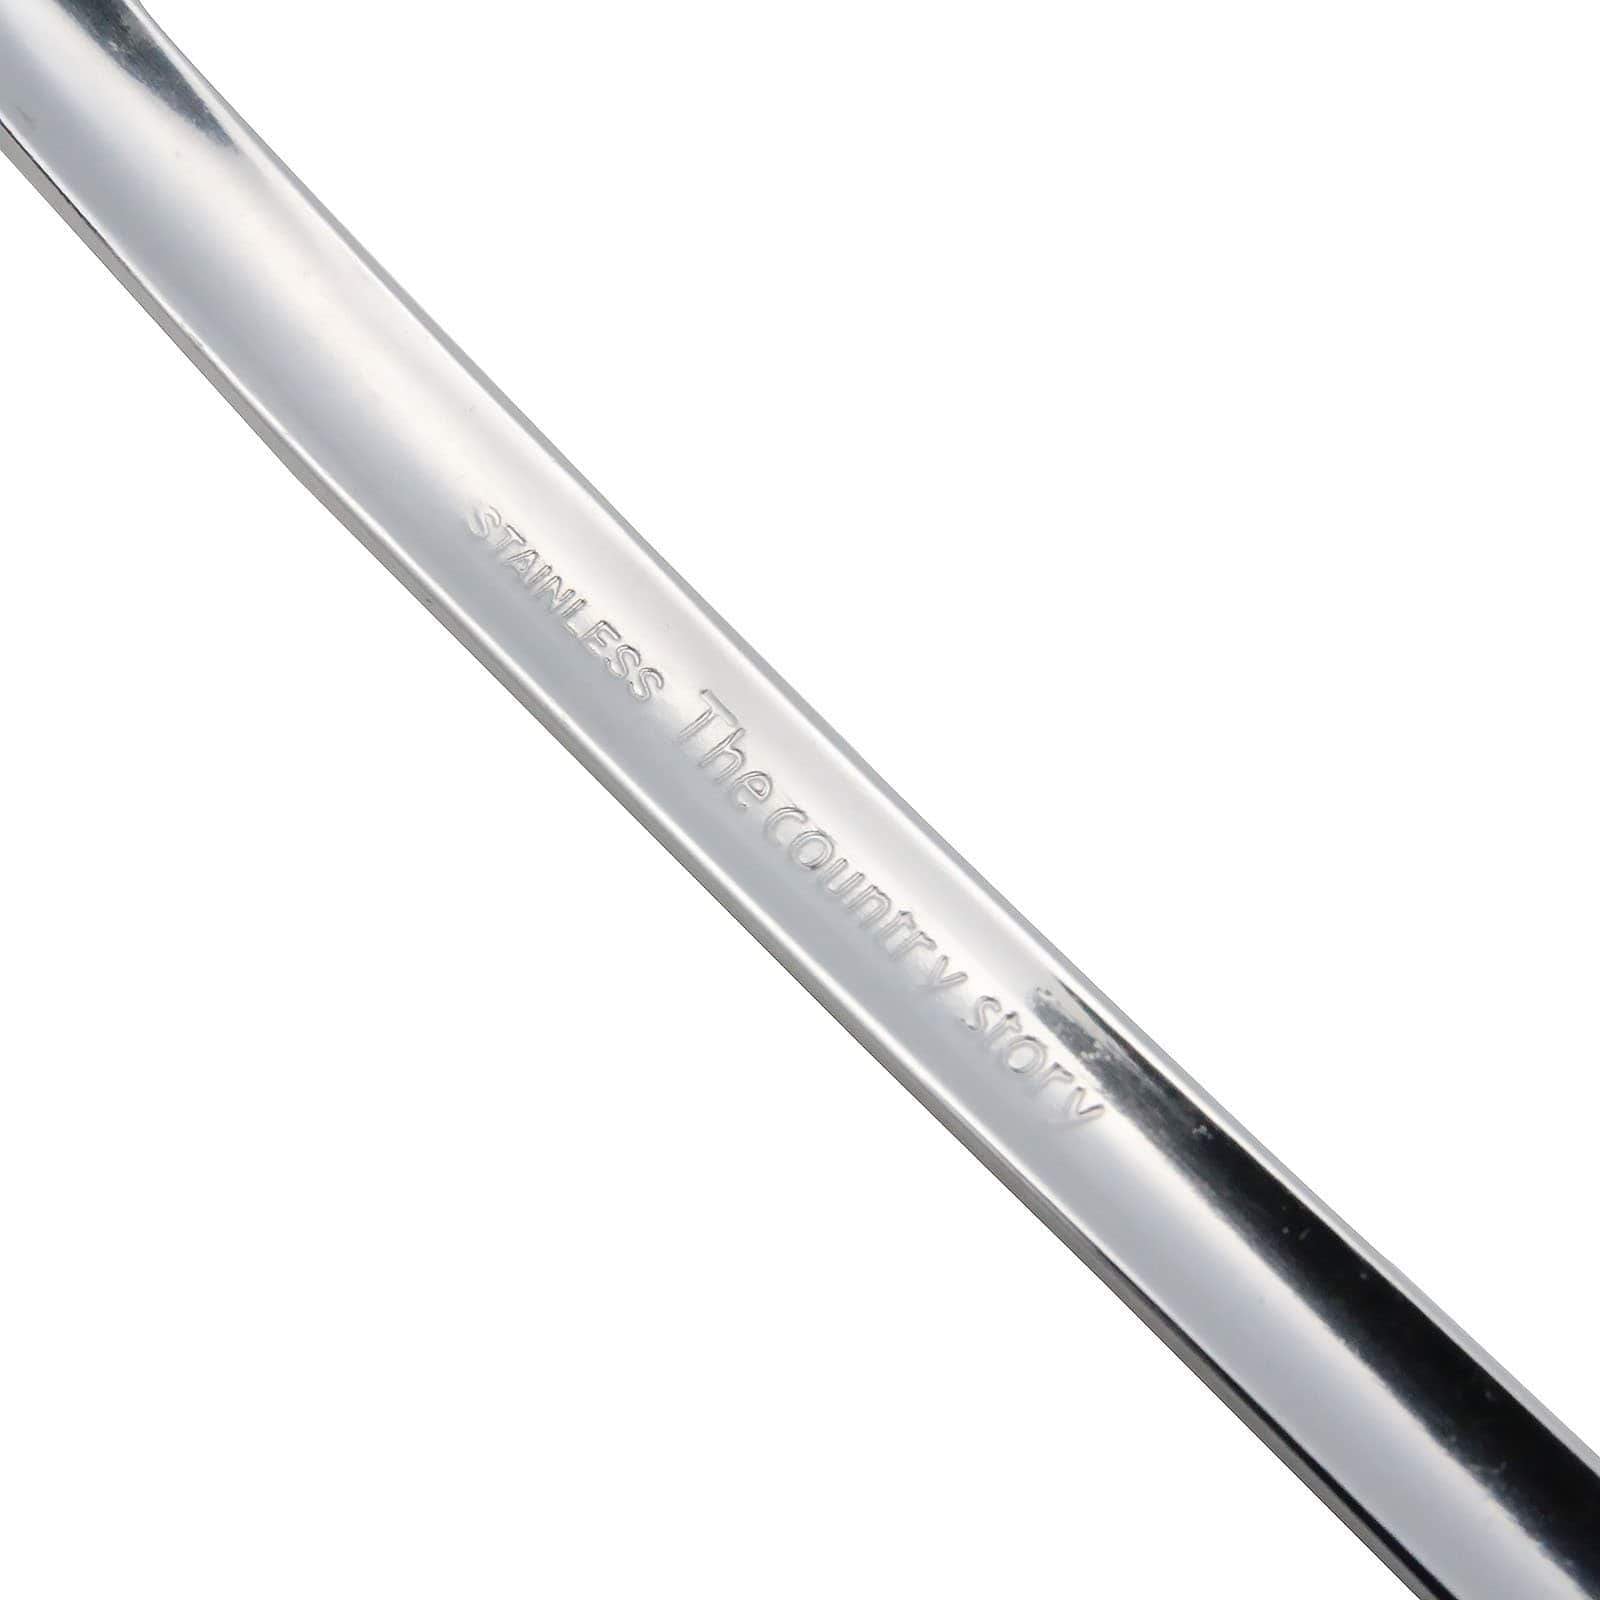 Takeda Garden Shovel Shaped Stainless Steel Spoon (Mirror Finish) Spoon